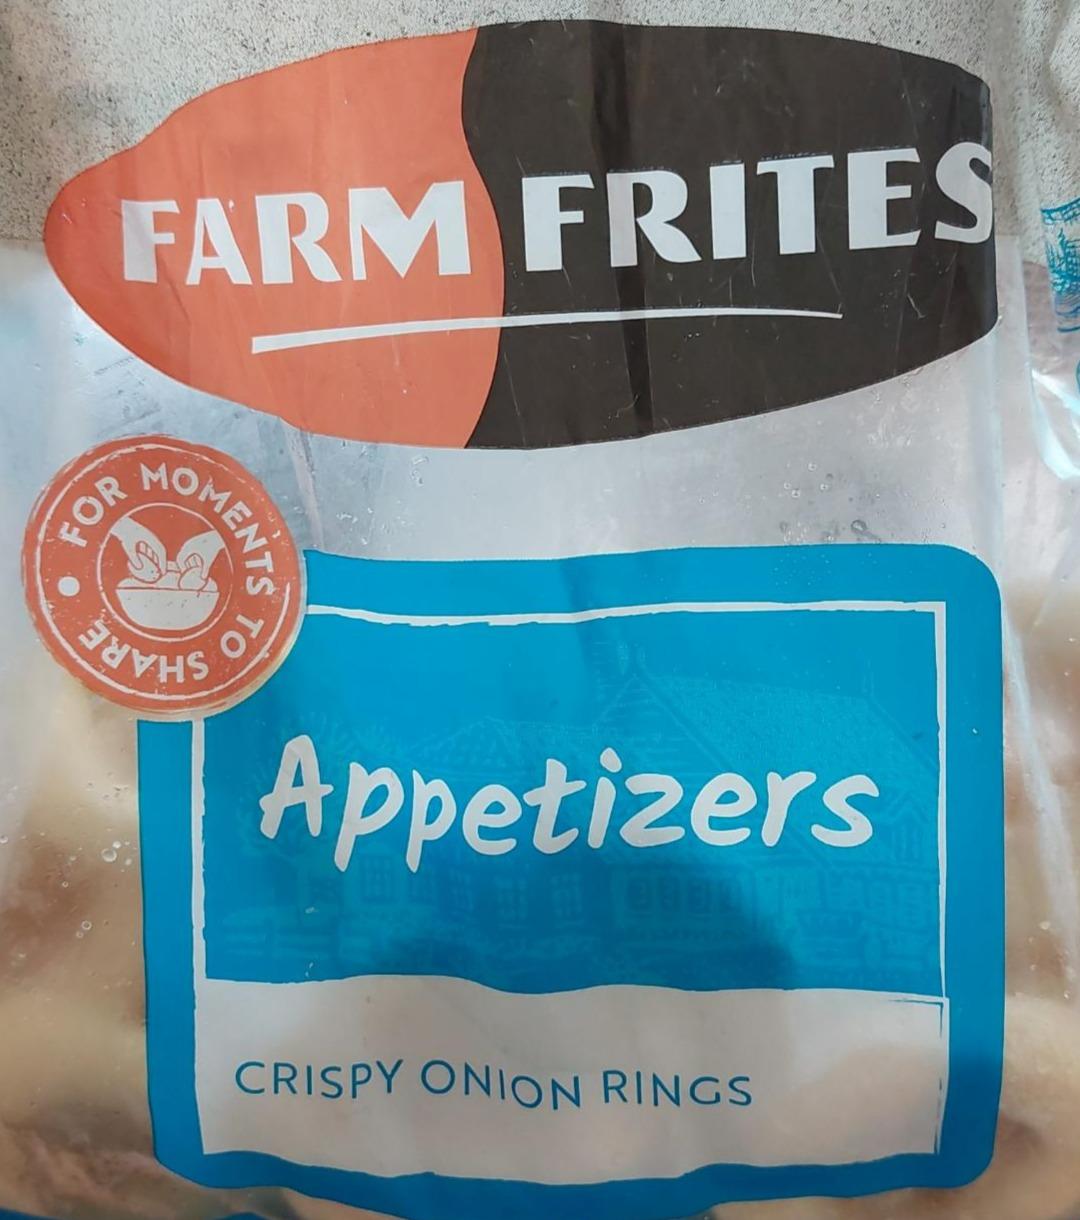 Fotografie - Appetizers Crispy onion rings Farm Frites